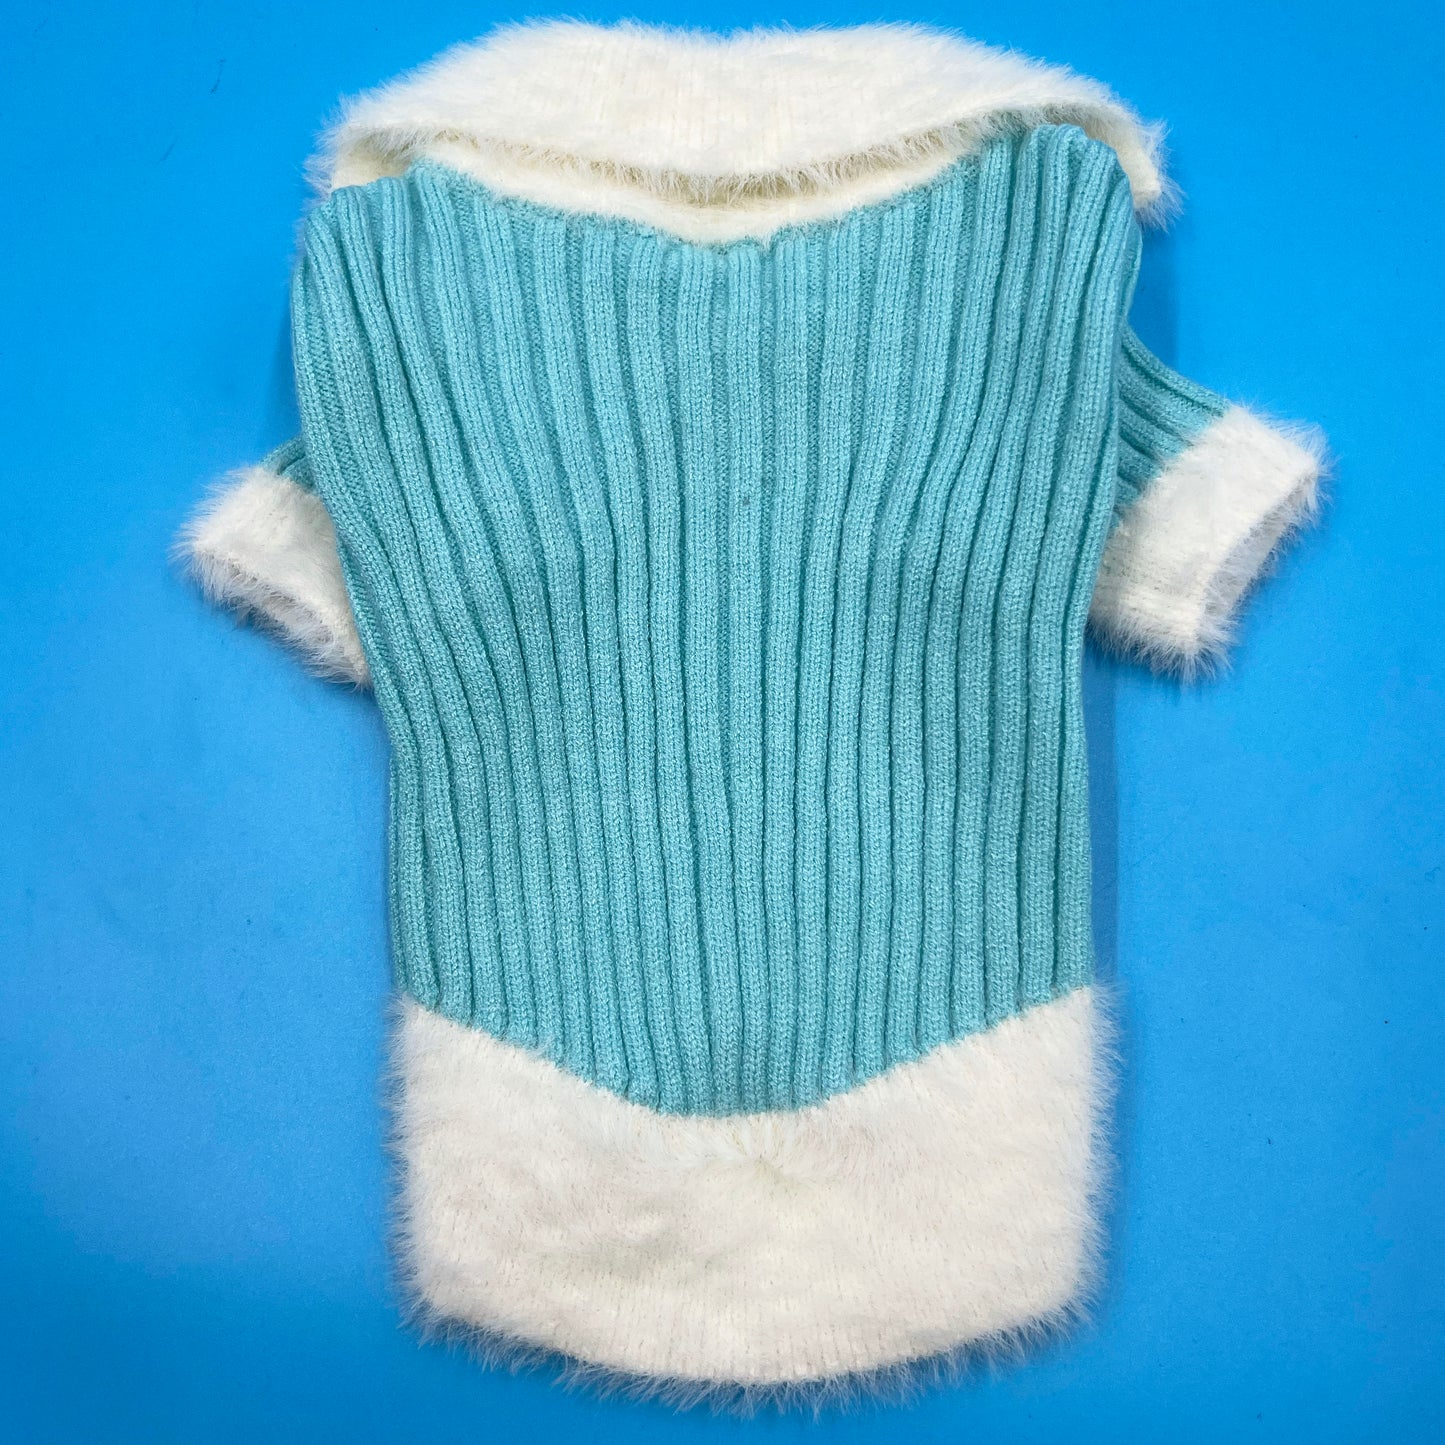 Fluffy Winter Sweater bearsupreme